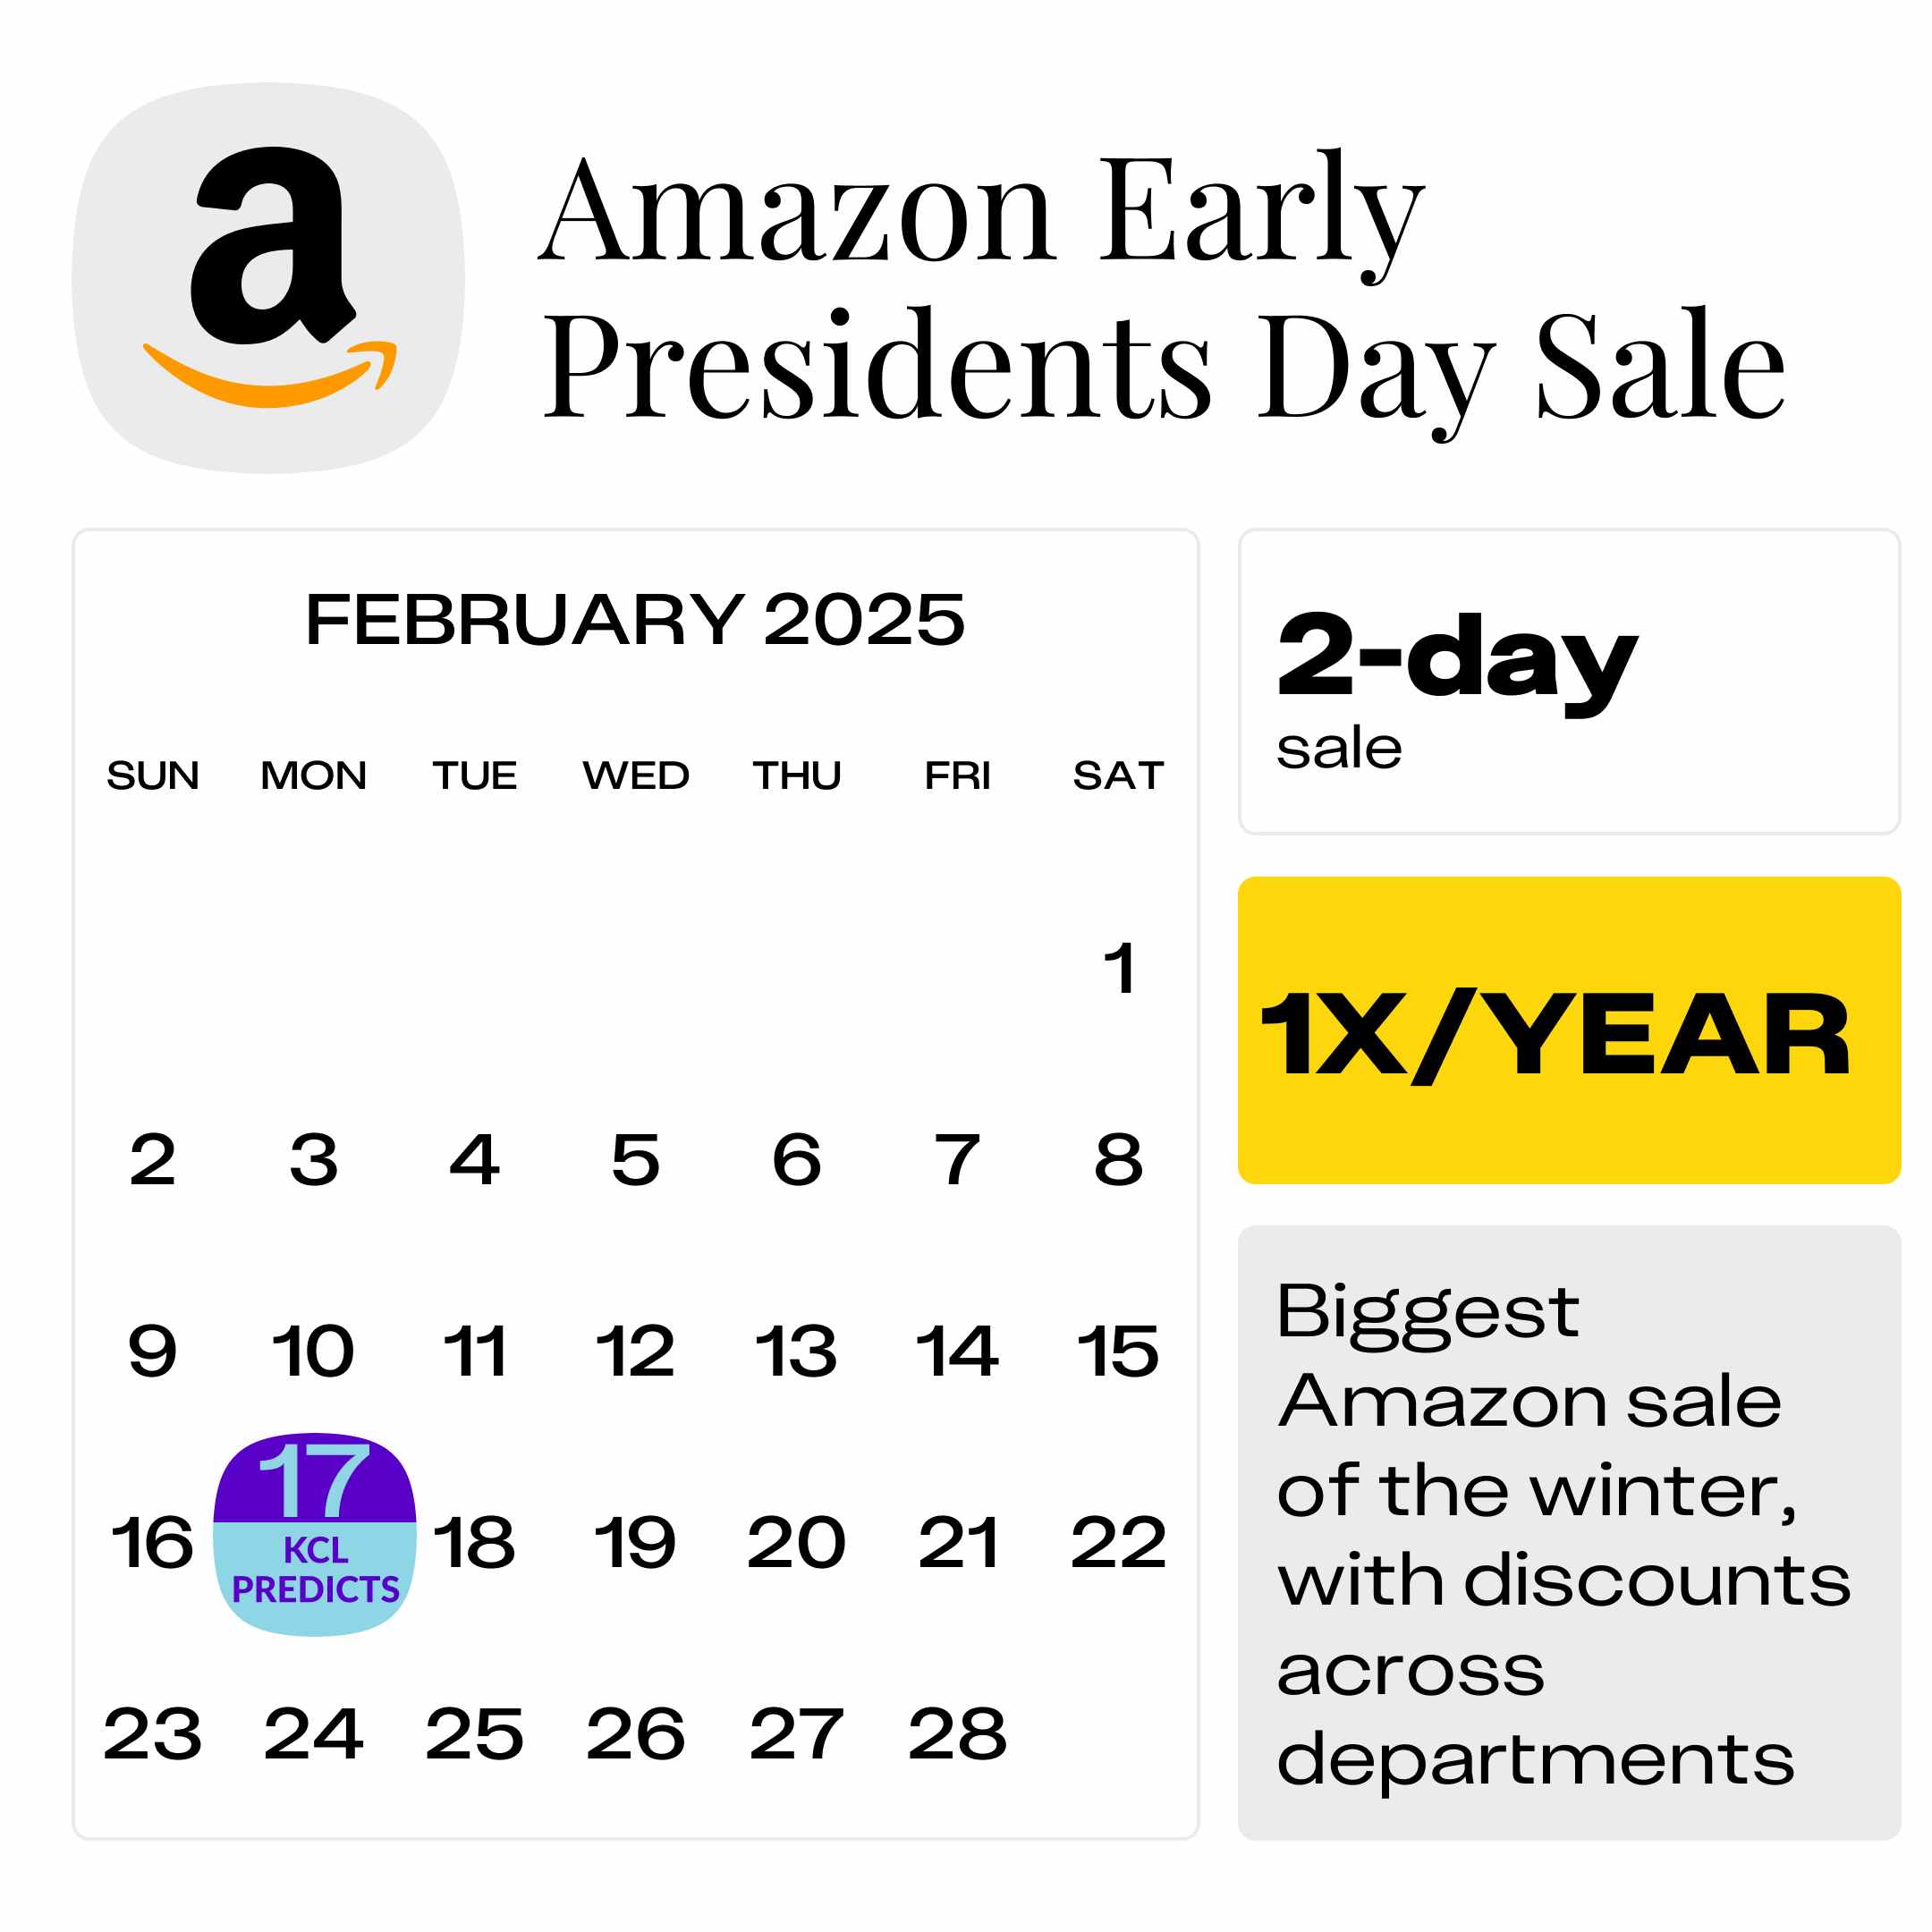 Amazon-Early-Presidents-Day-Sale